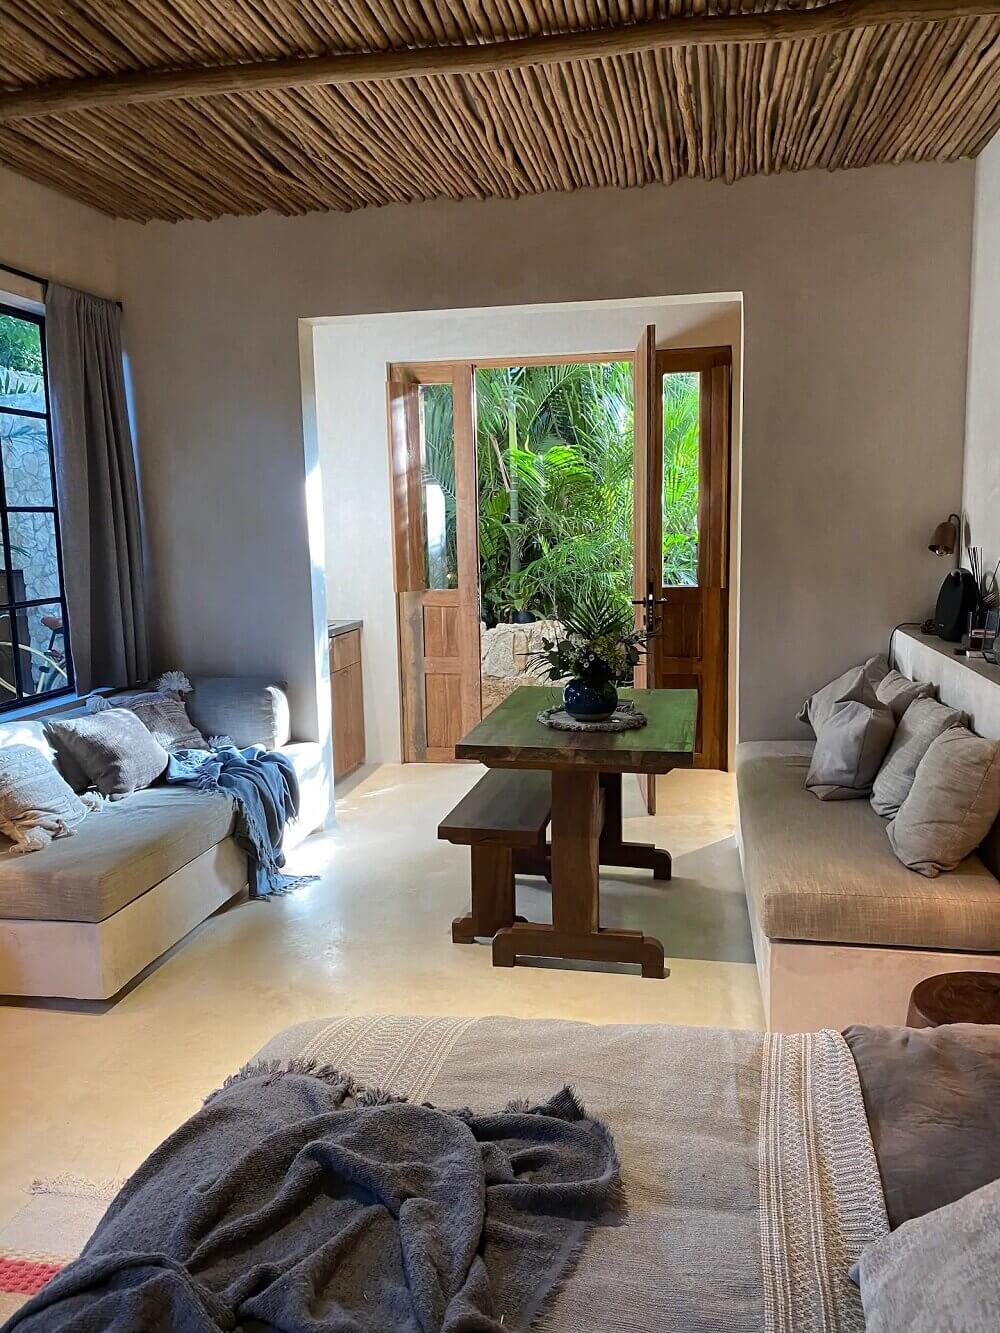 LianeTulum ABeautifulStudioApartmentAirbnbinMexico TheNordroom9 Liane Tulum: A Beautiful Studio Apartment Airbnb in Mexico